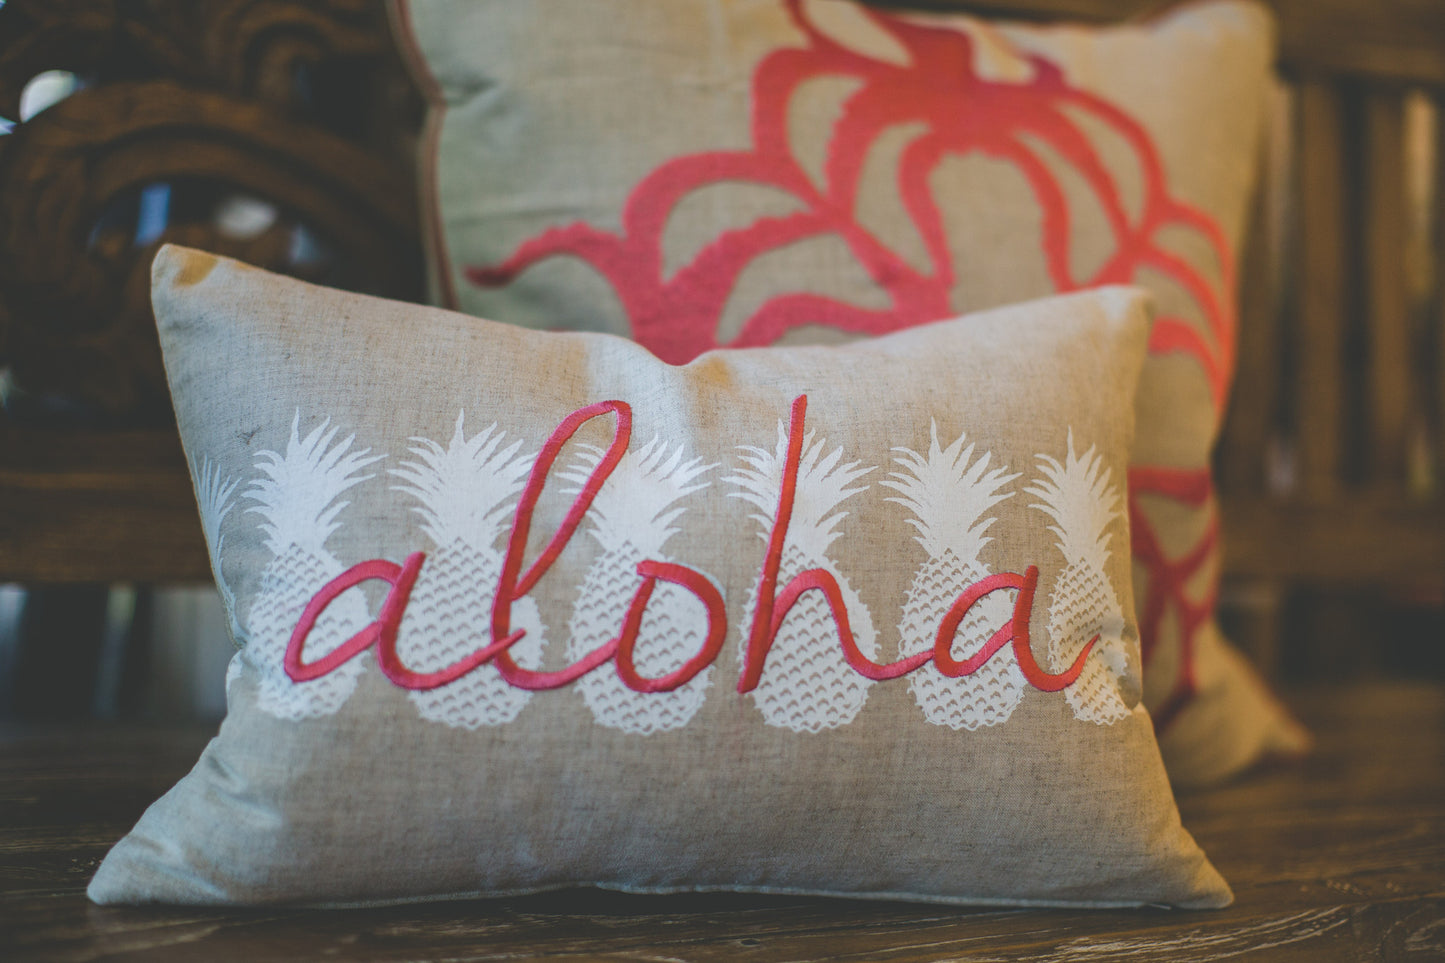 Ho'okipa/Aloha Small Rectangle Pillow Cover | Various Embroidery Colors